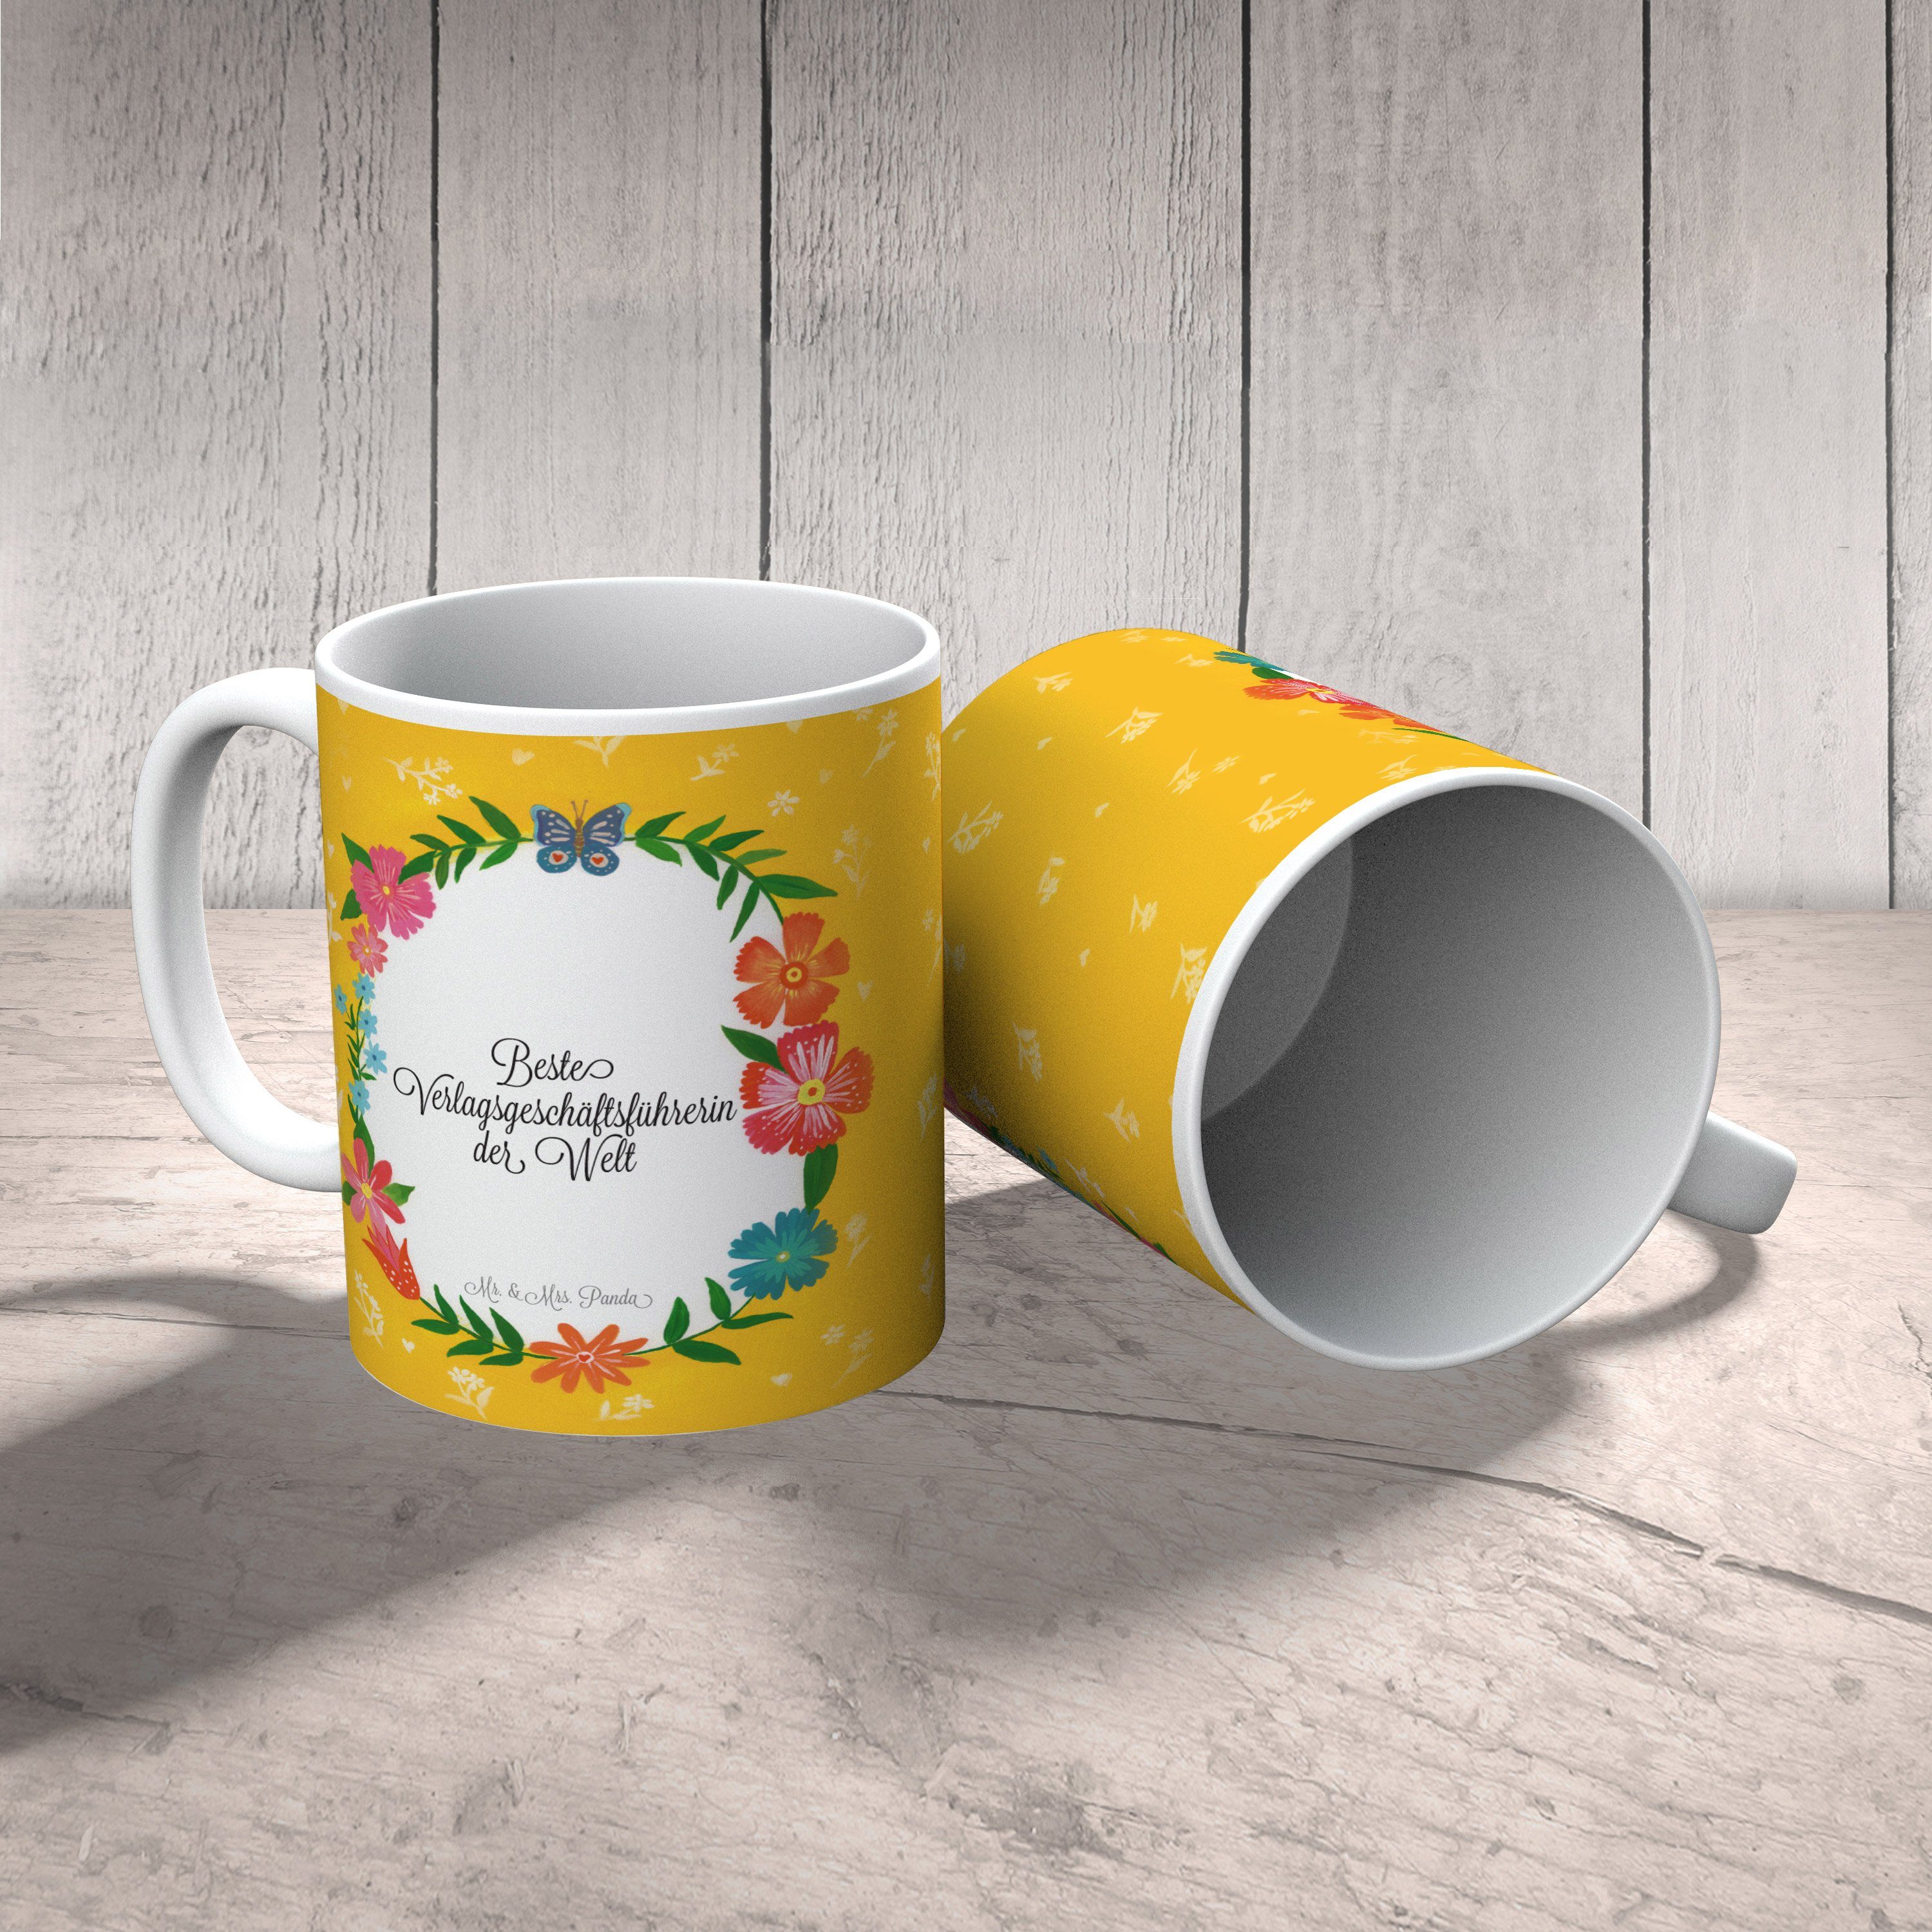 Mr. & Mrs. - Geschenk, Geschenk Panda Verlagsgeschäftsführerin Tasse Abschluss, Keramik Kaffe, Tasse